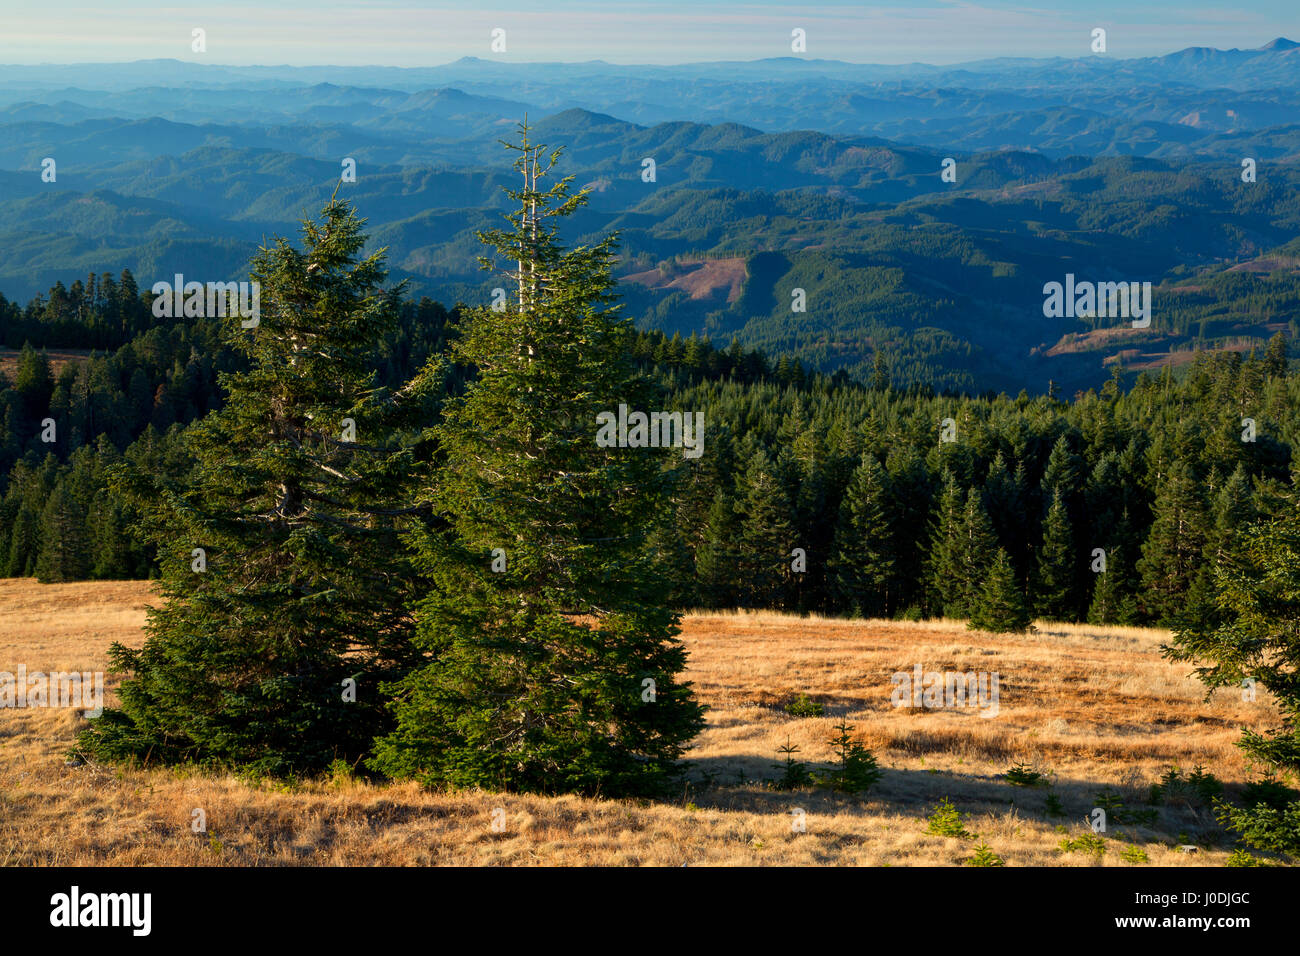 Noble fir (Abies procera) on Marys Peak, Marys Peak Scenic Botanical Area, Siuslaw National Forest, Oregon Stock Photo